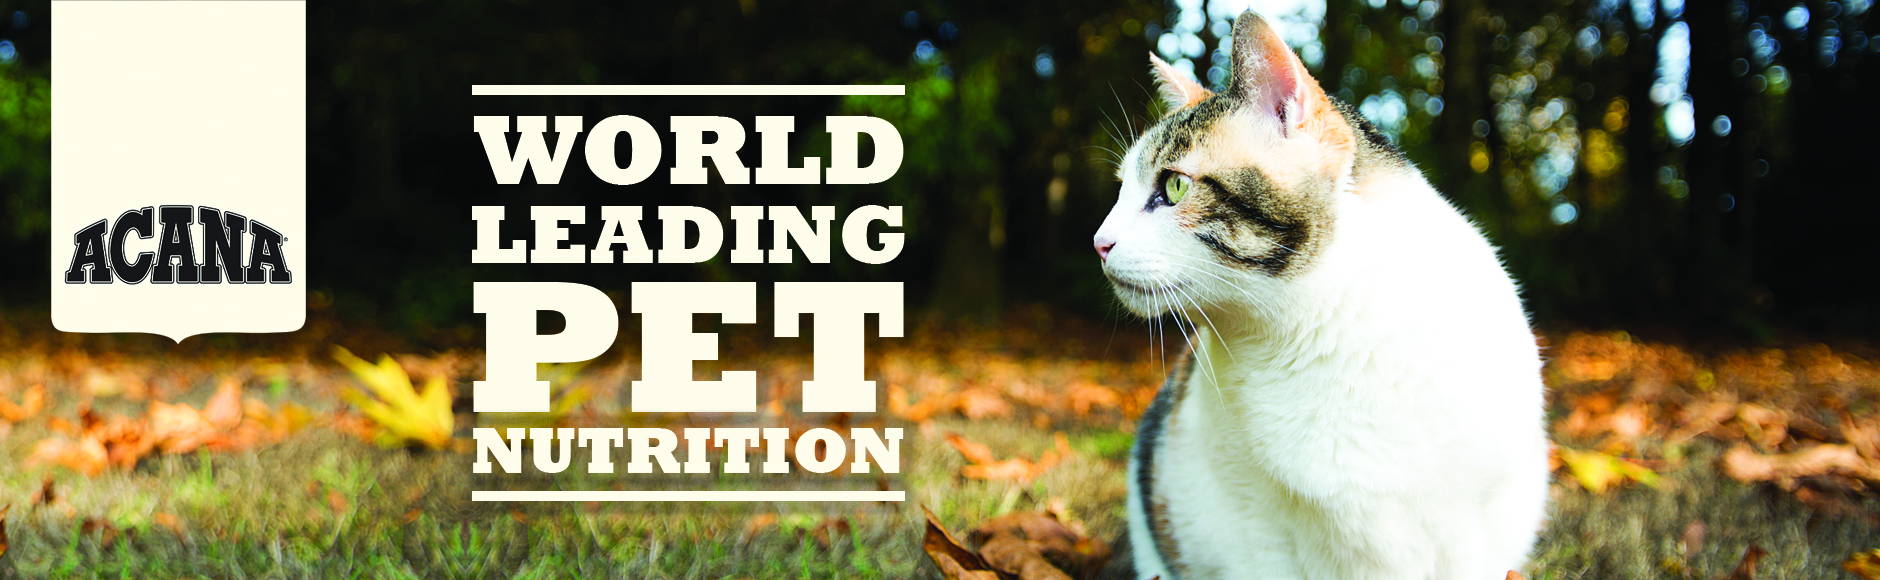 Acana world leading pet nutrition